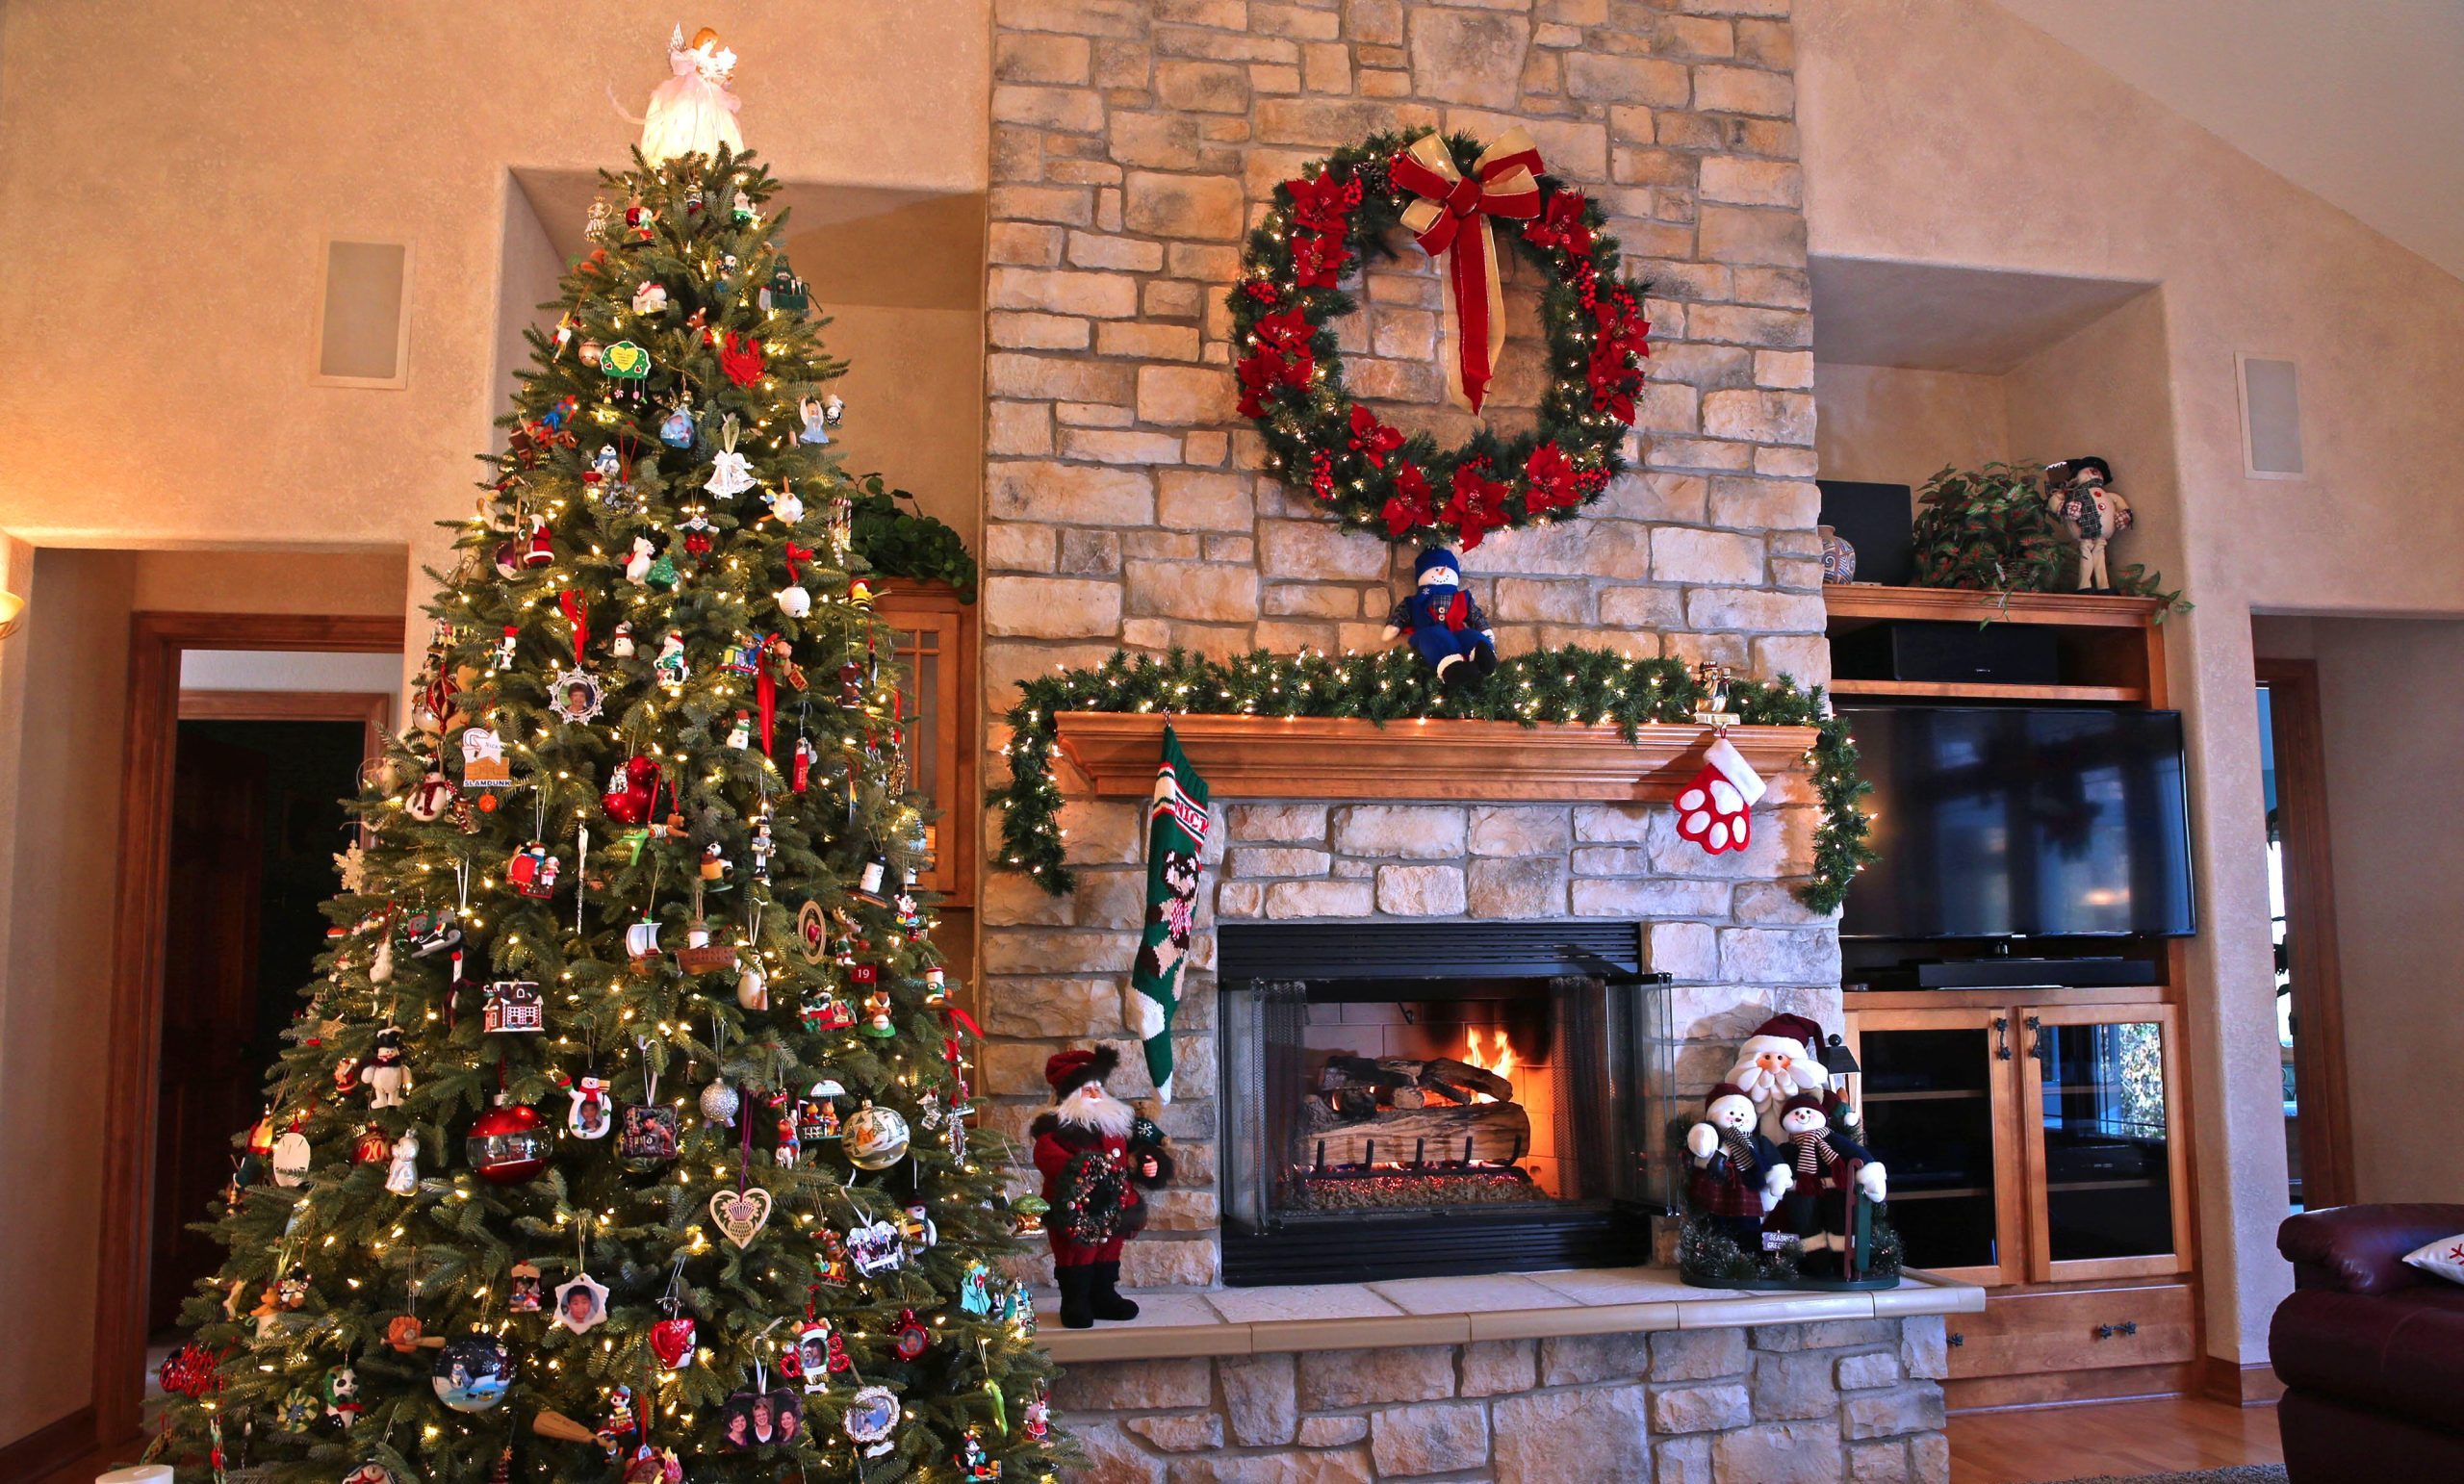 A Christmas tree next to a fireplace.